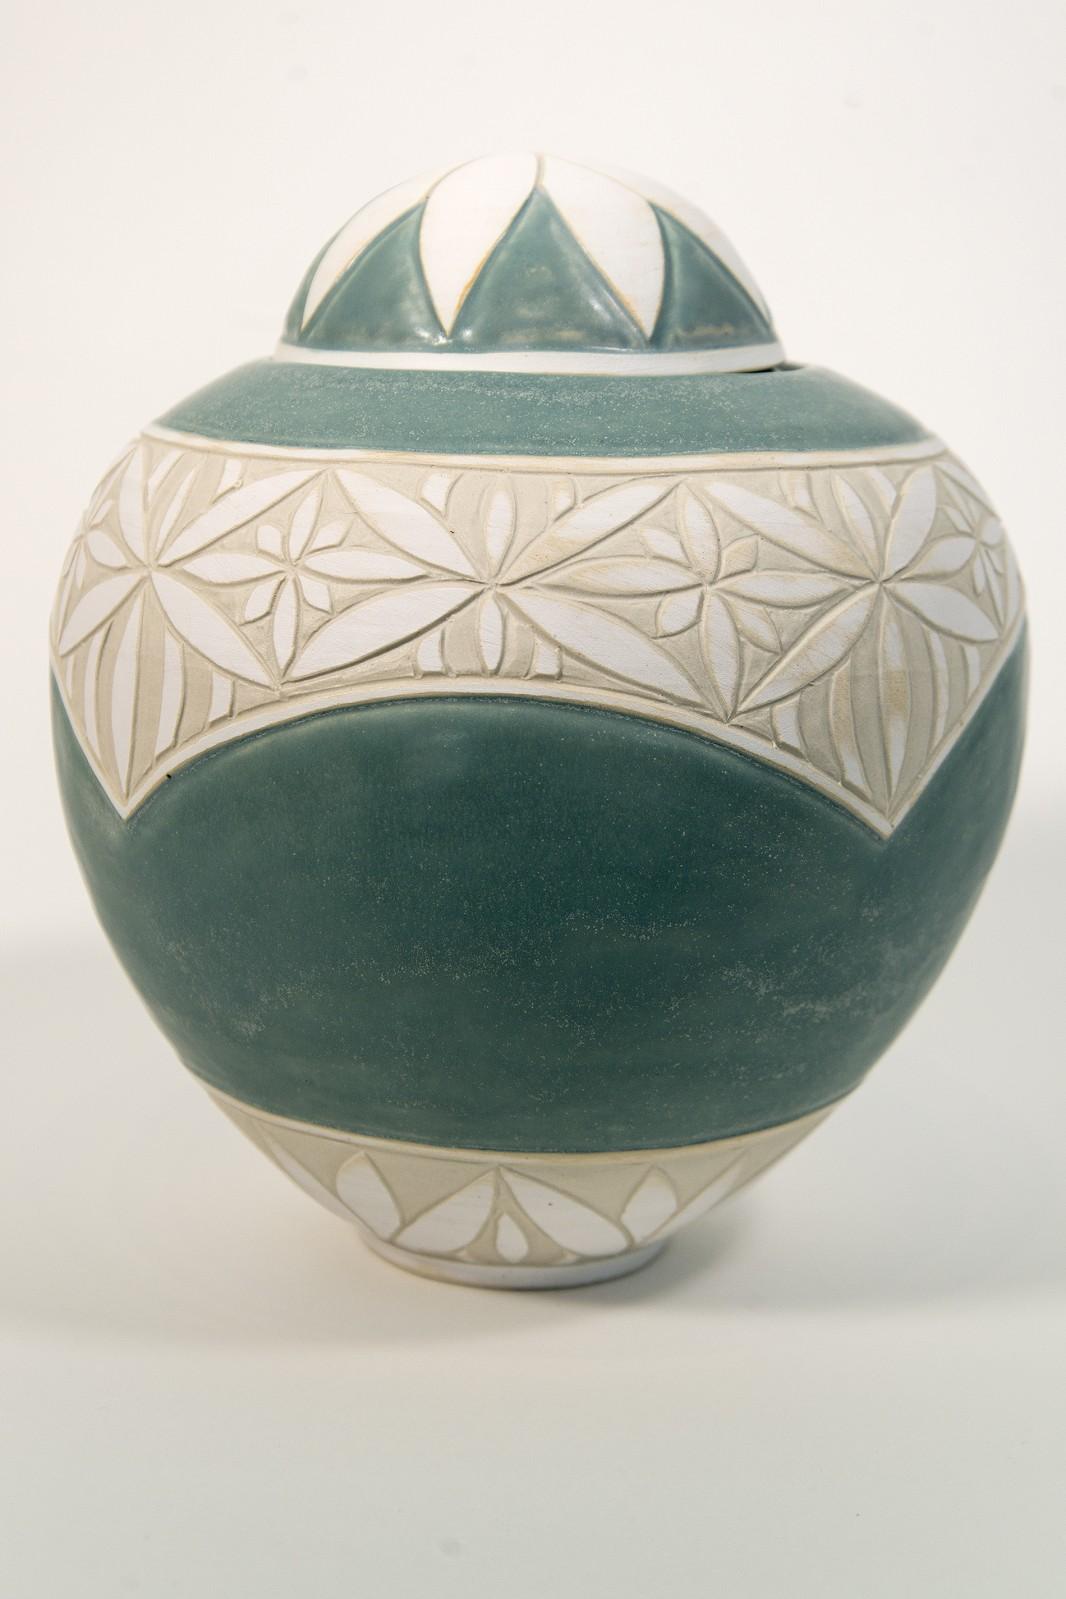 Loren Kaplan Abstract Sculpture - Aqua Jar with Engraved Detail - decorative, handcrafted, porcelain vessel